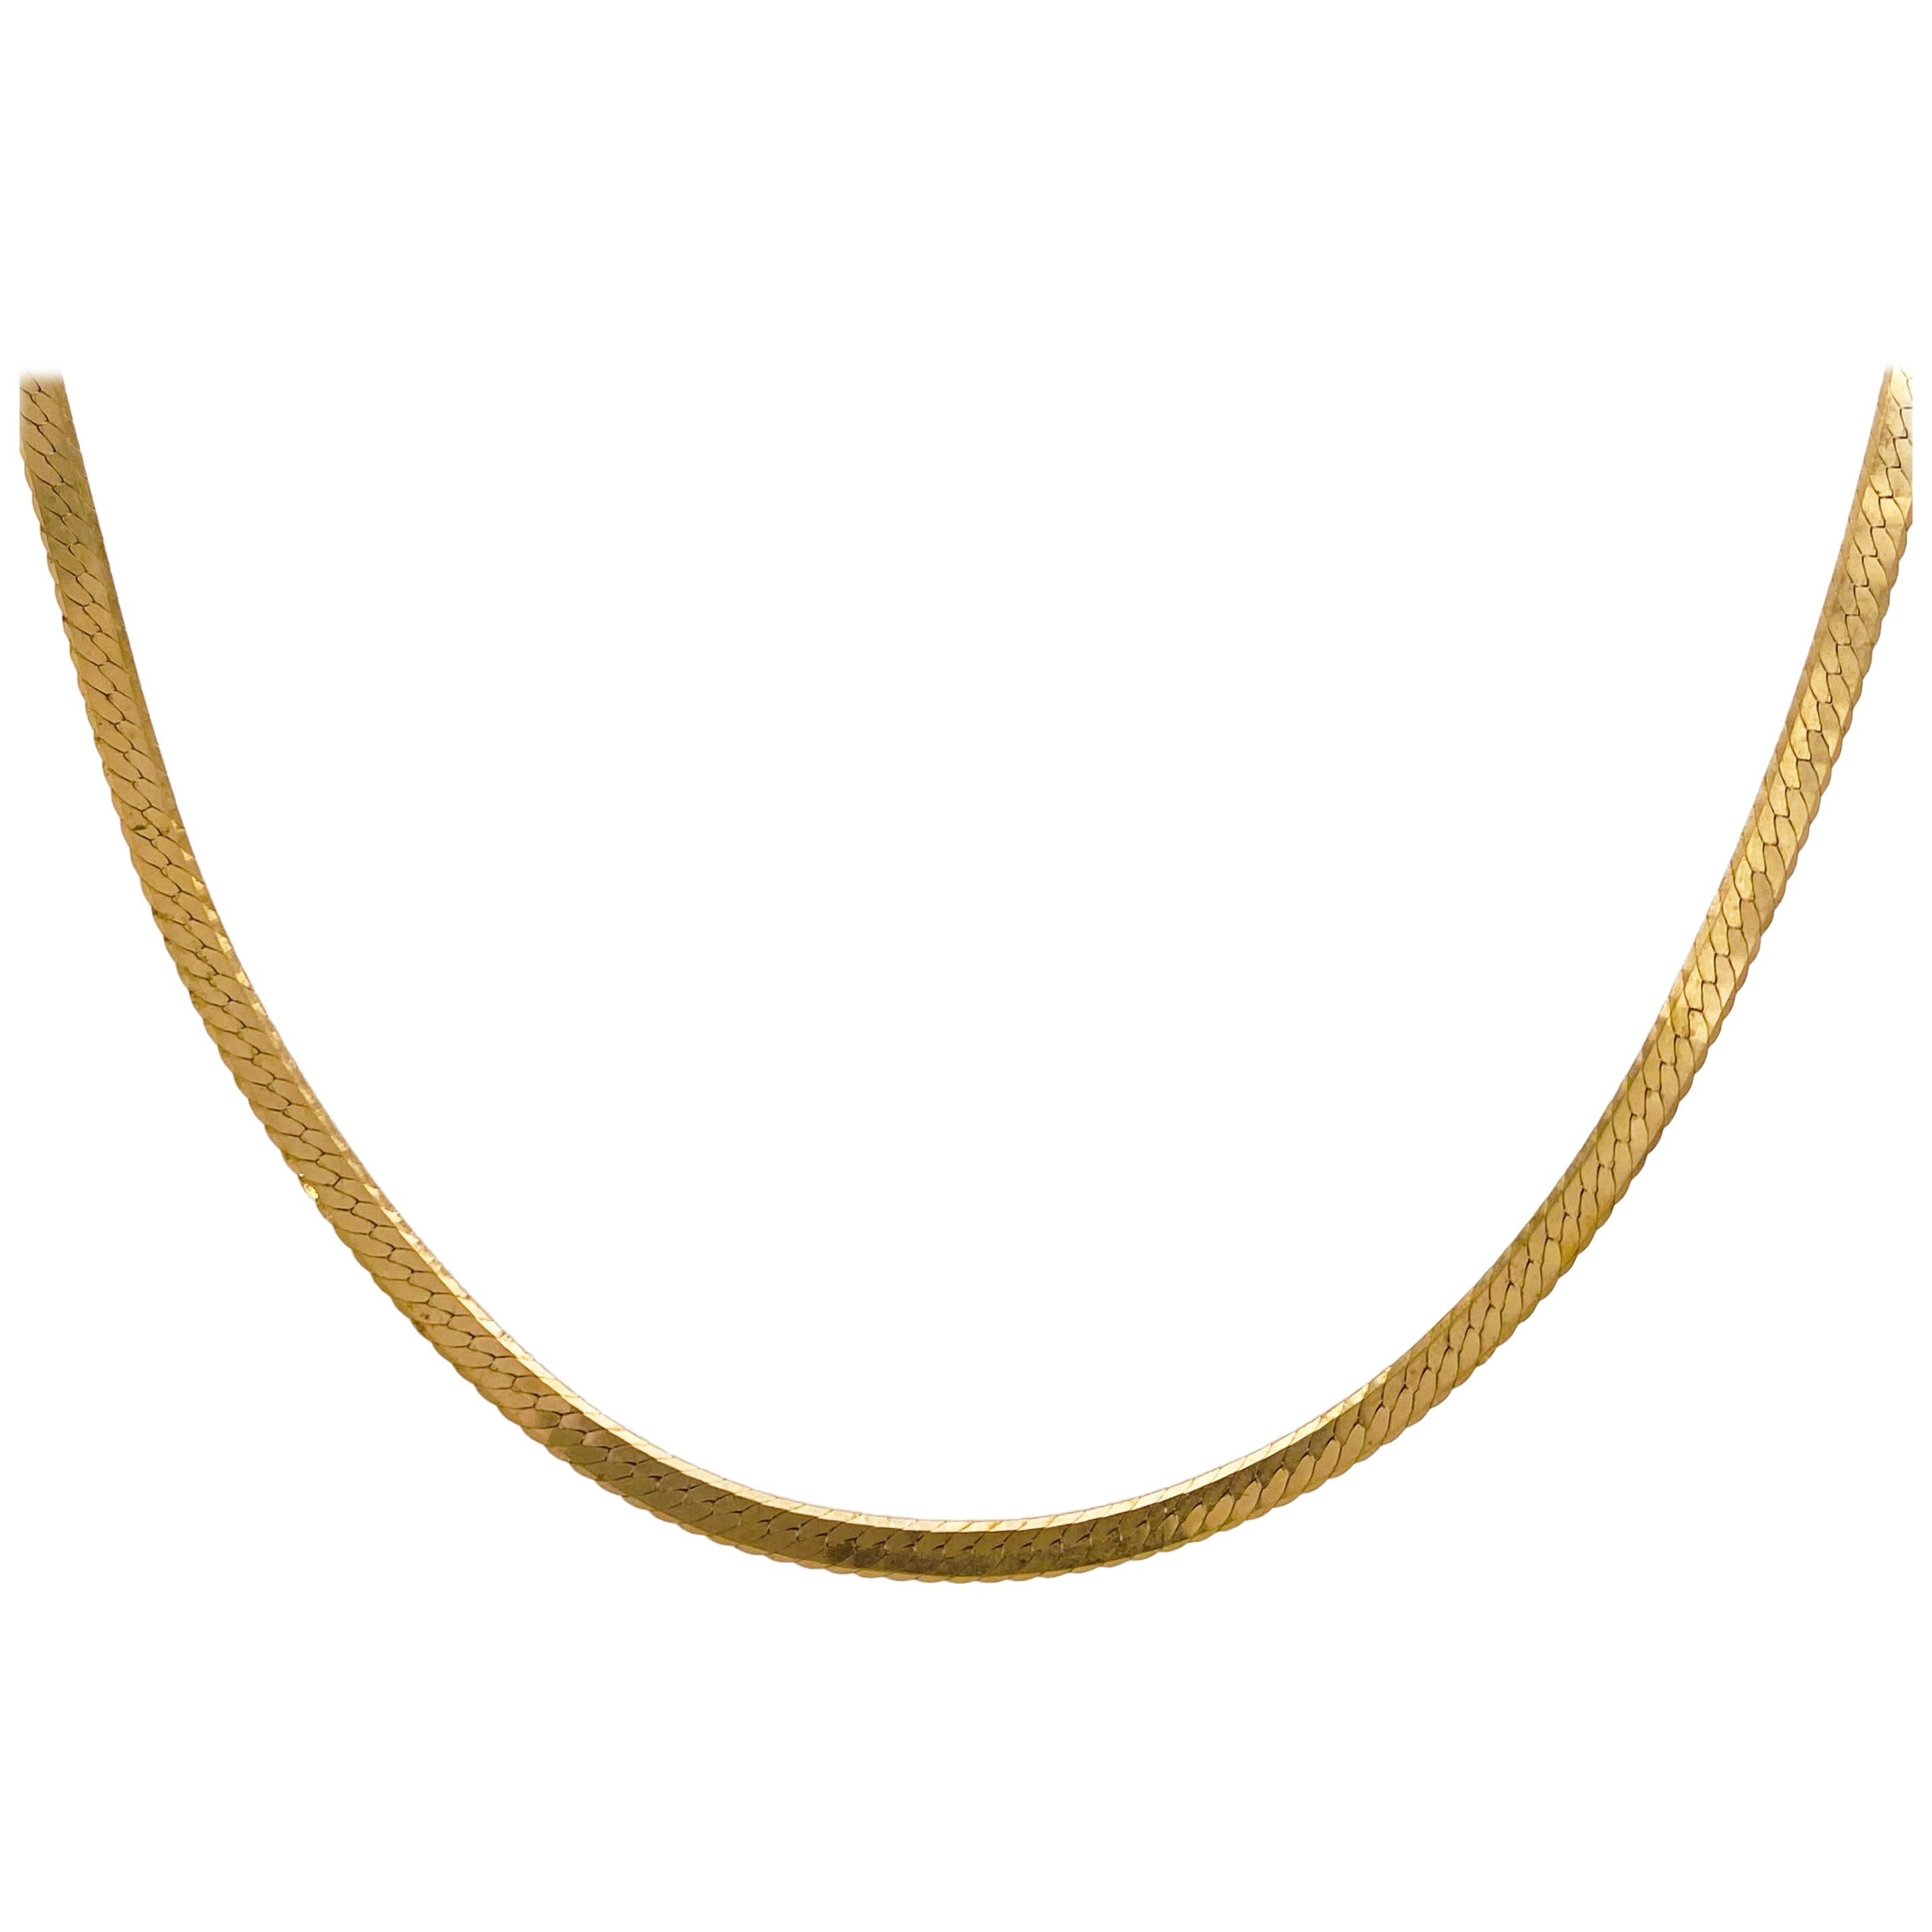 Gold Herringbone Chain Flat Design in 14 Karat Yellow Gold 16 Inches Long, 